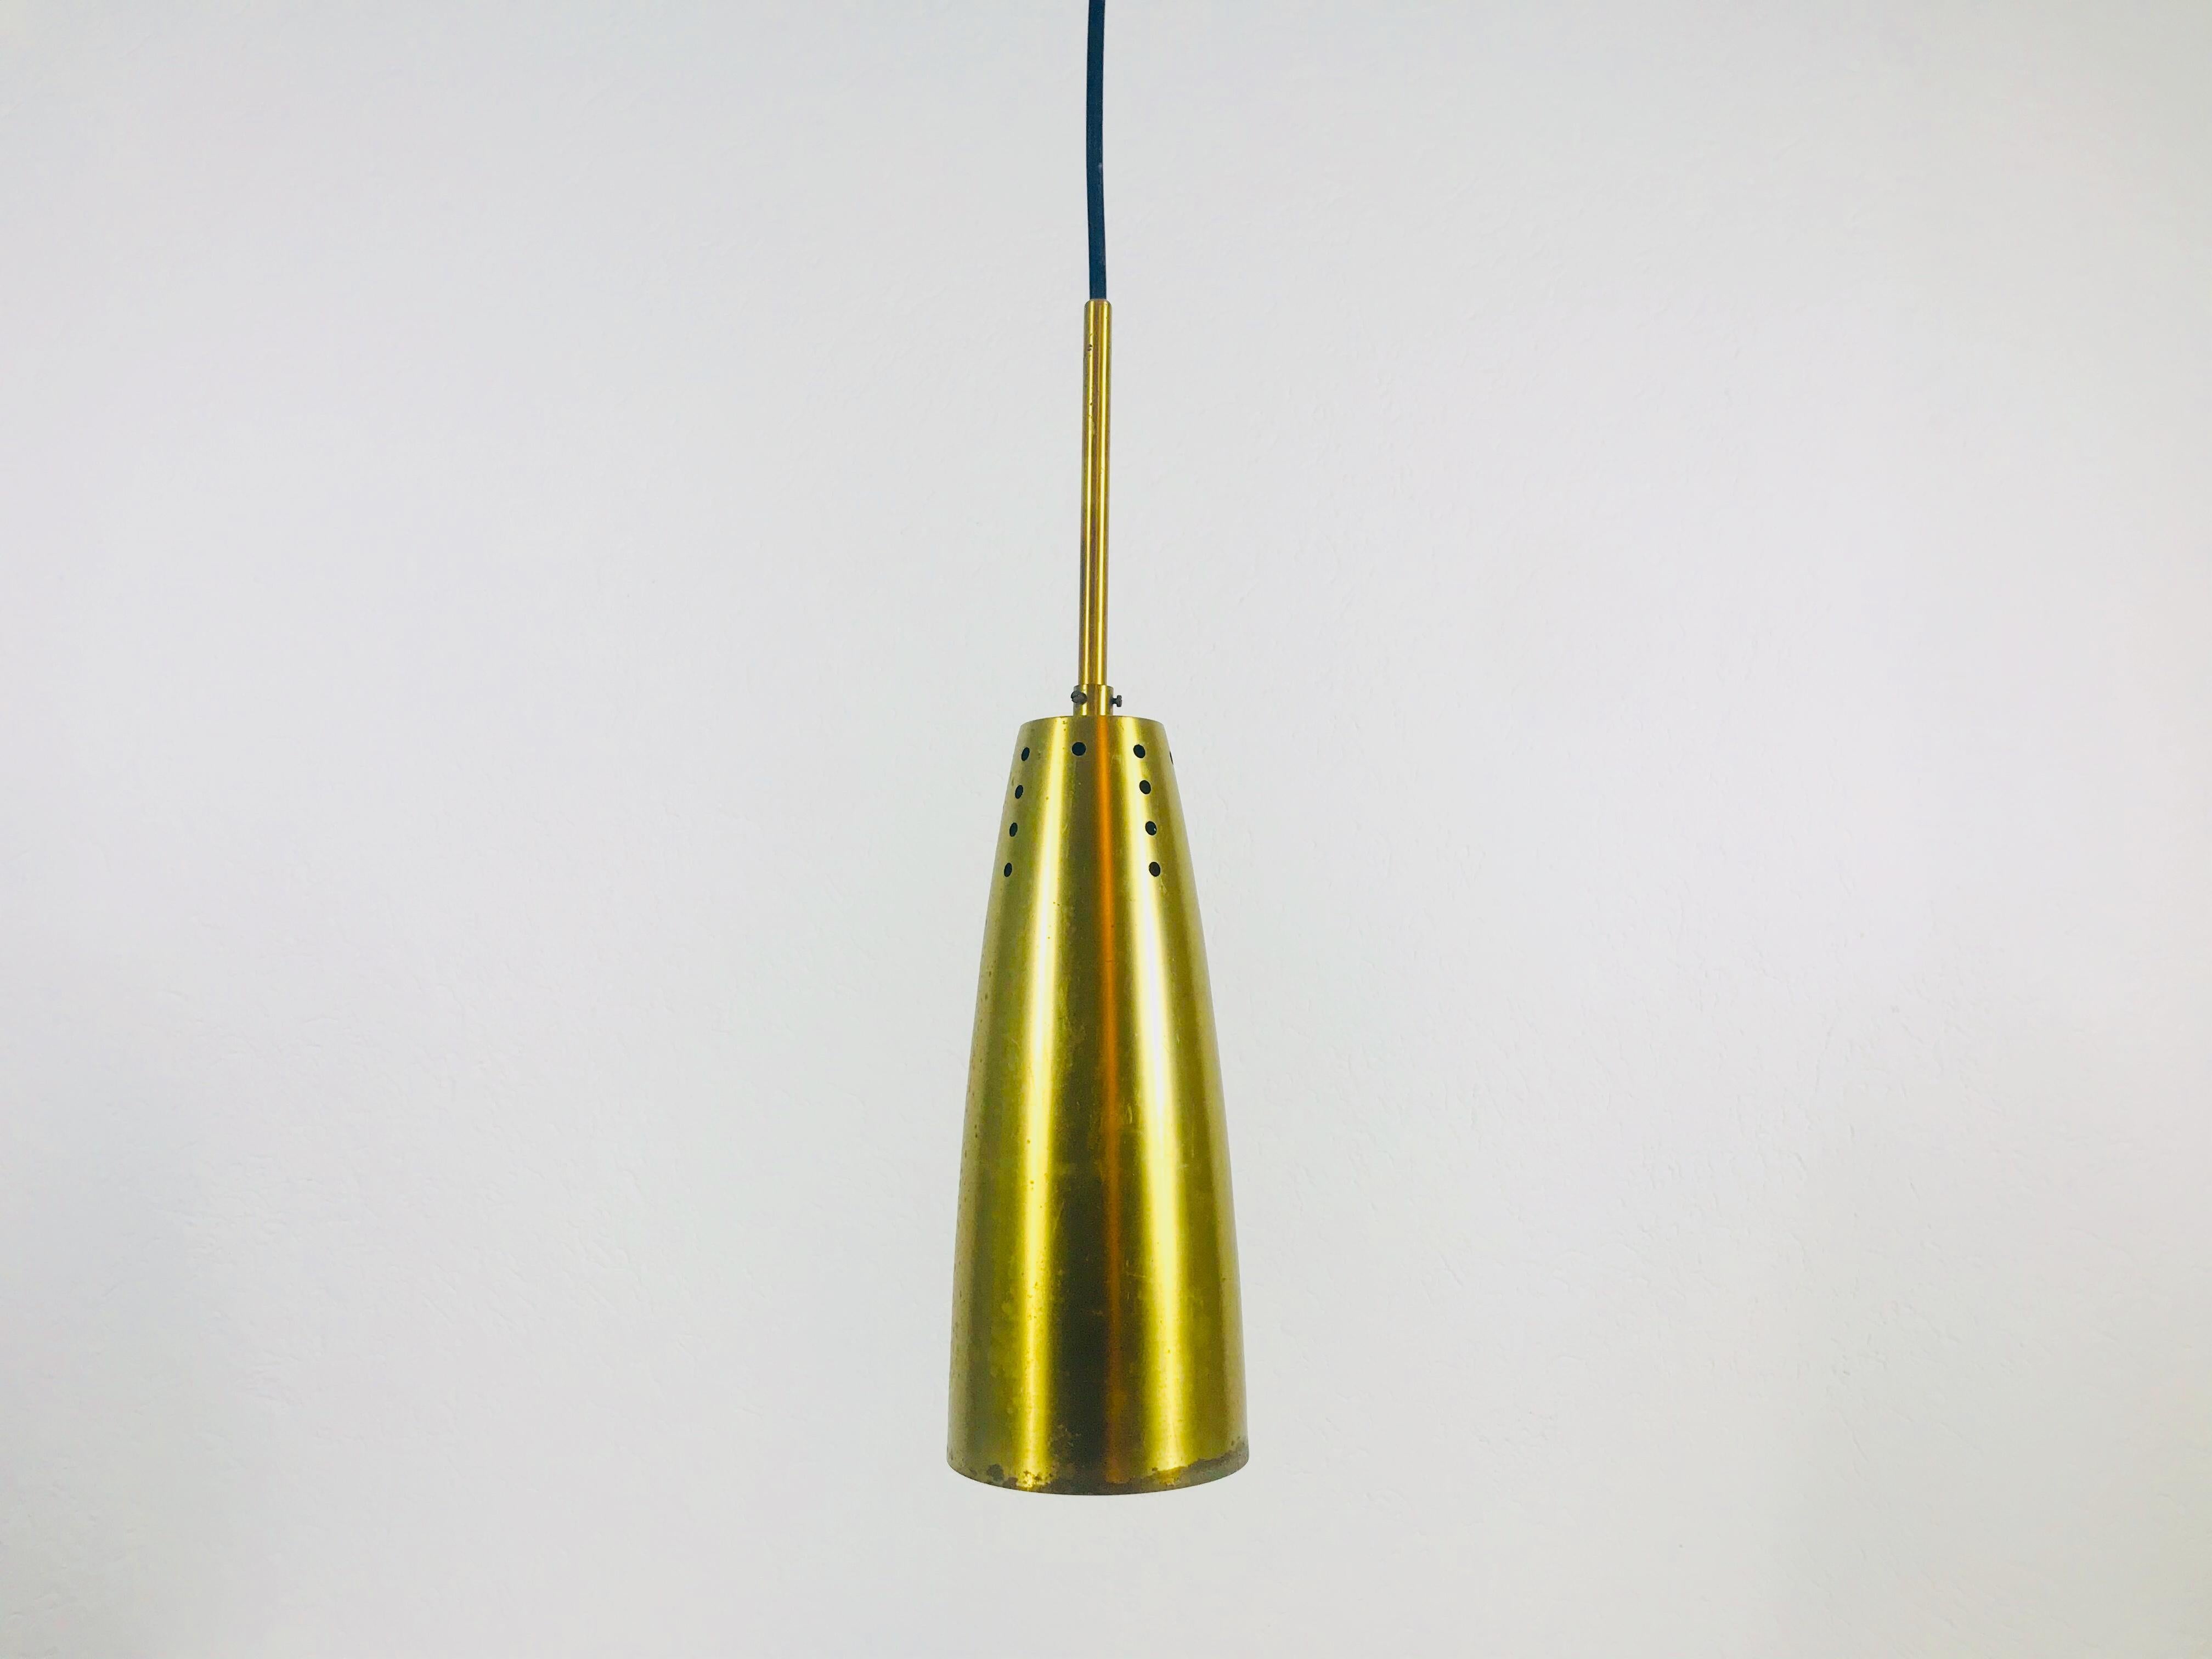 Set of 3 Full Brass Mid-Century Modern Pendant Lamps, 1950s, Germany For Sale 4